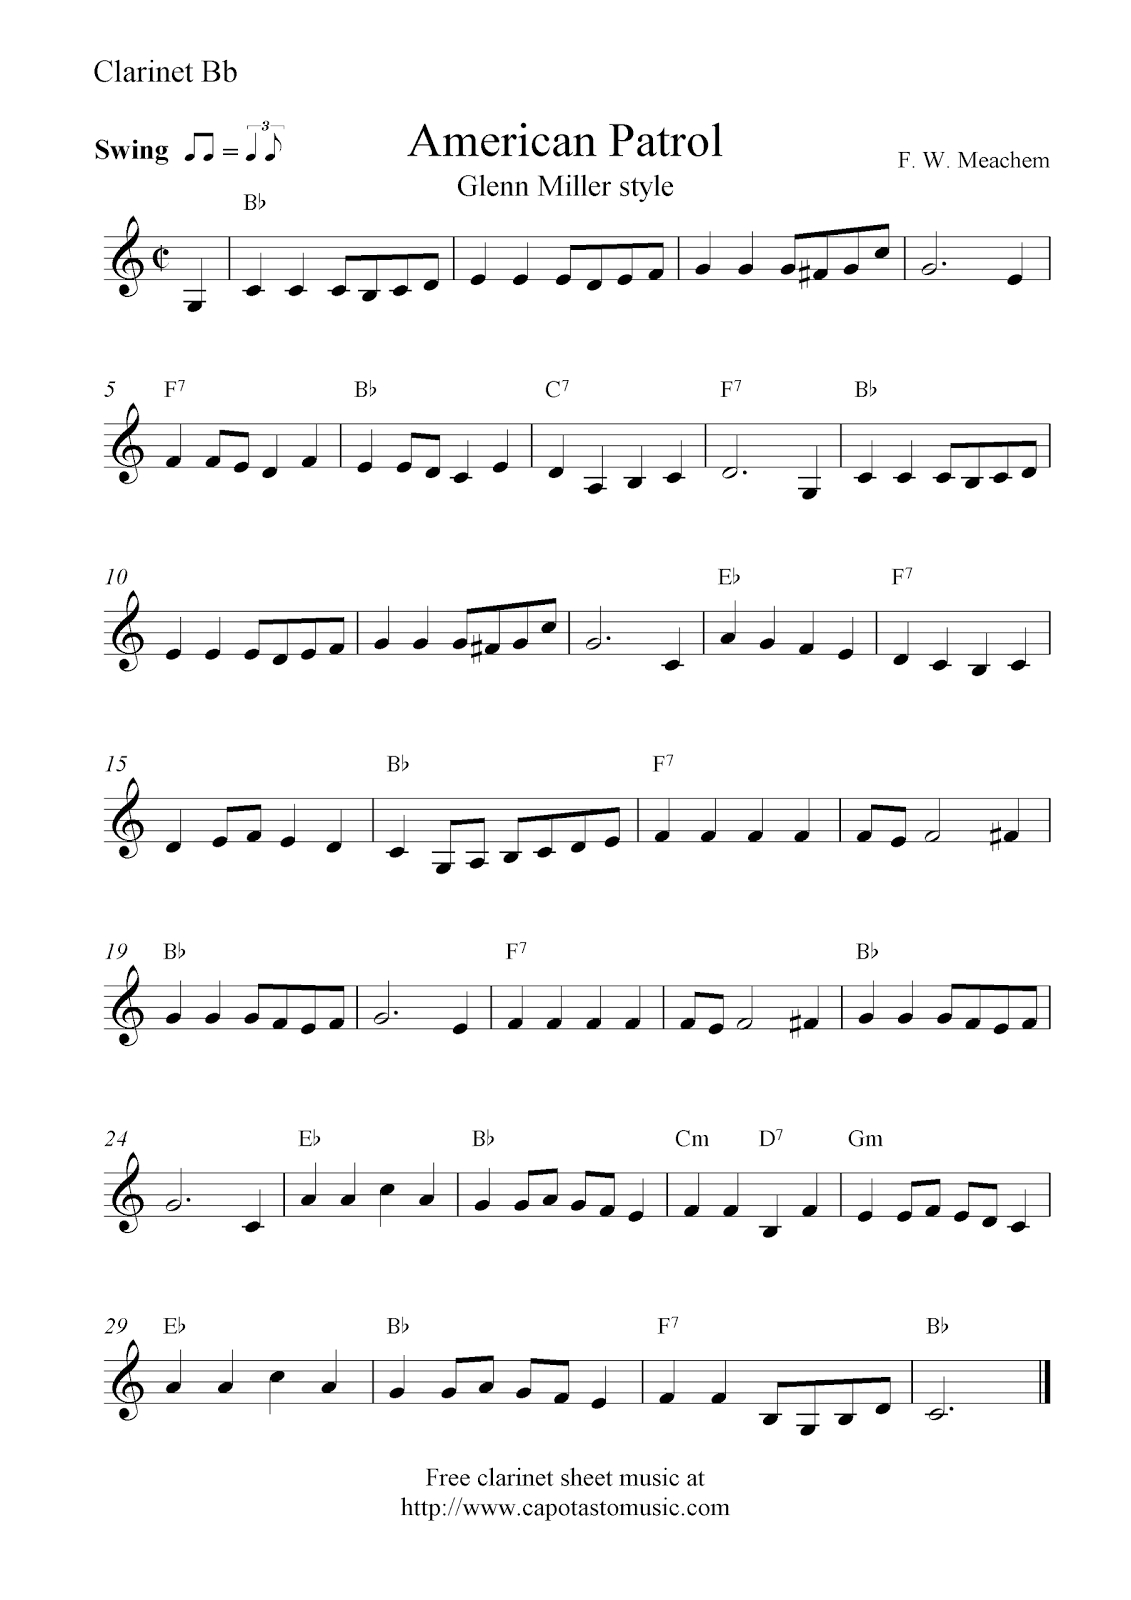 American Patrol, Free Clarinet Sheet Music Notes - Free Sheet Music For Clarinet Printable